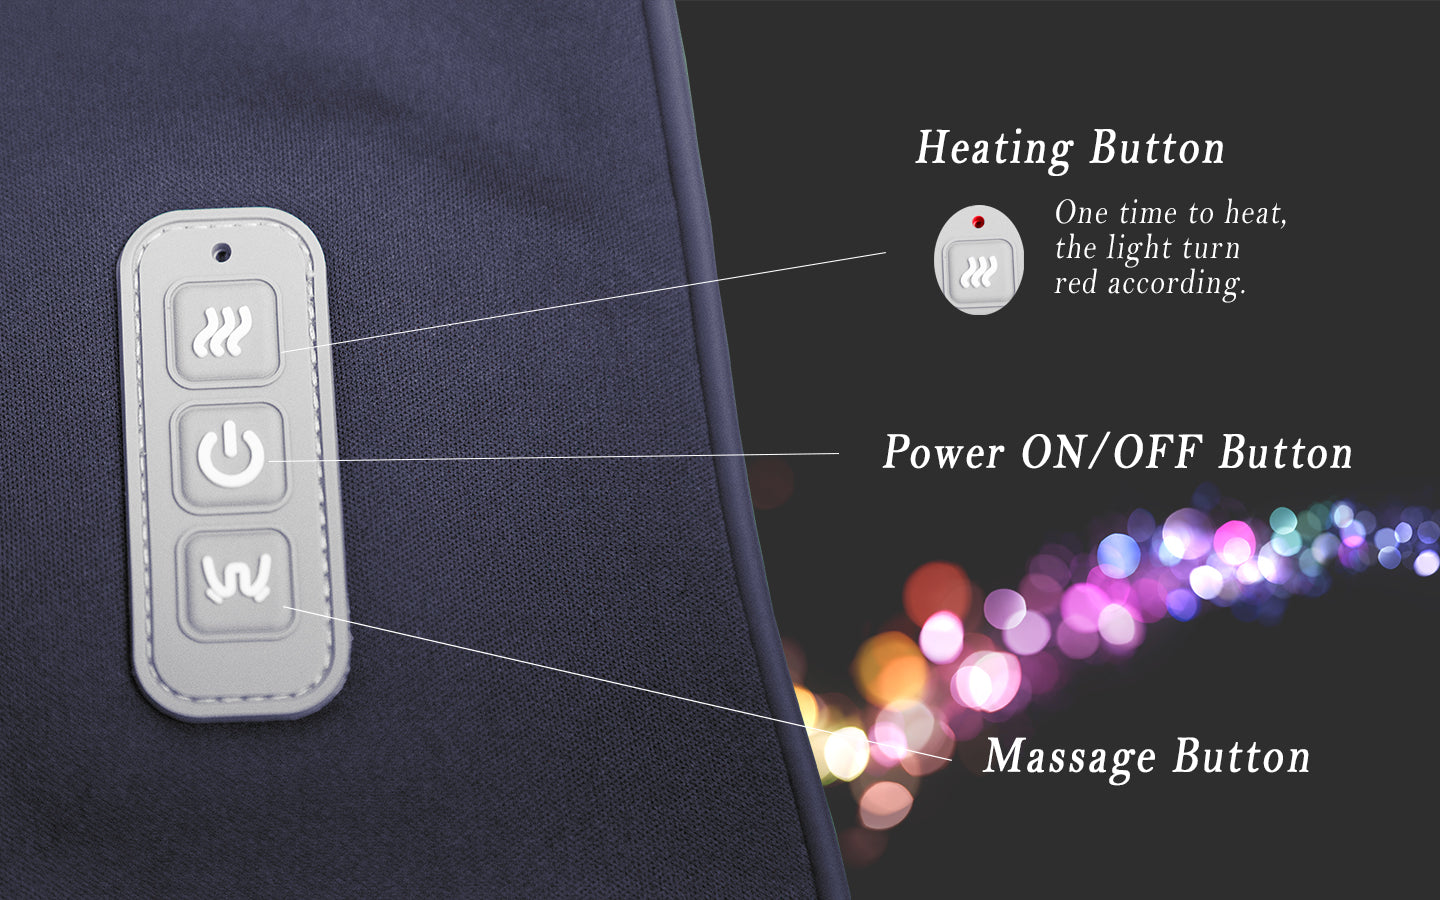 Heating button, power on/off button, massage button